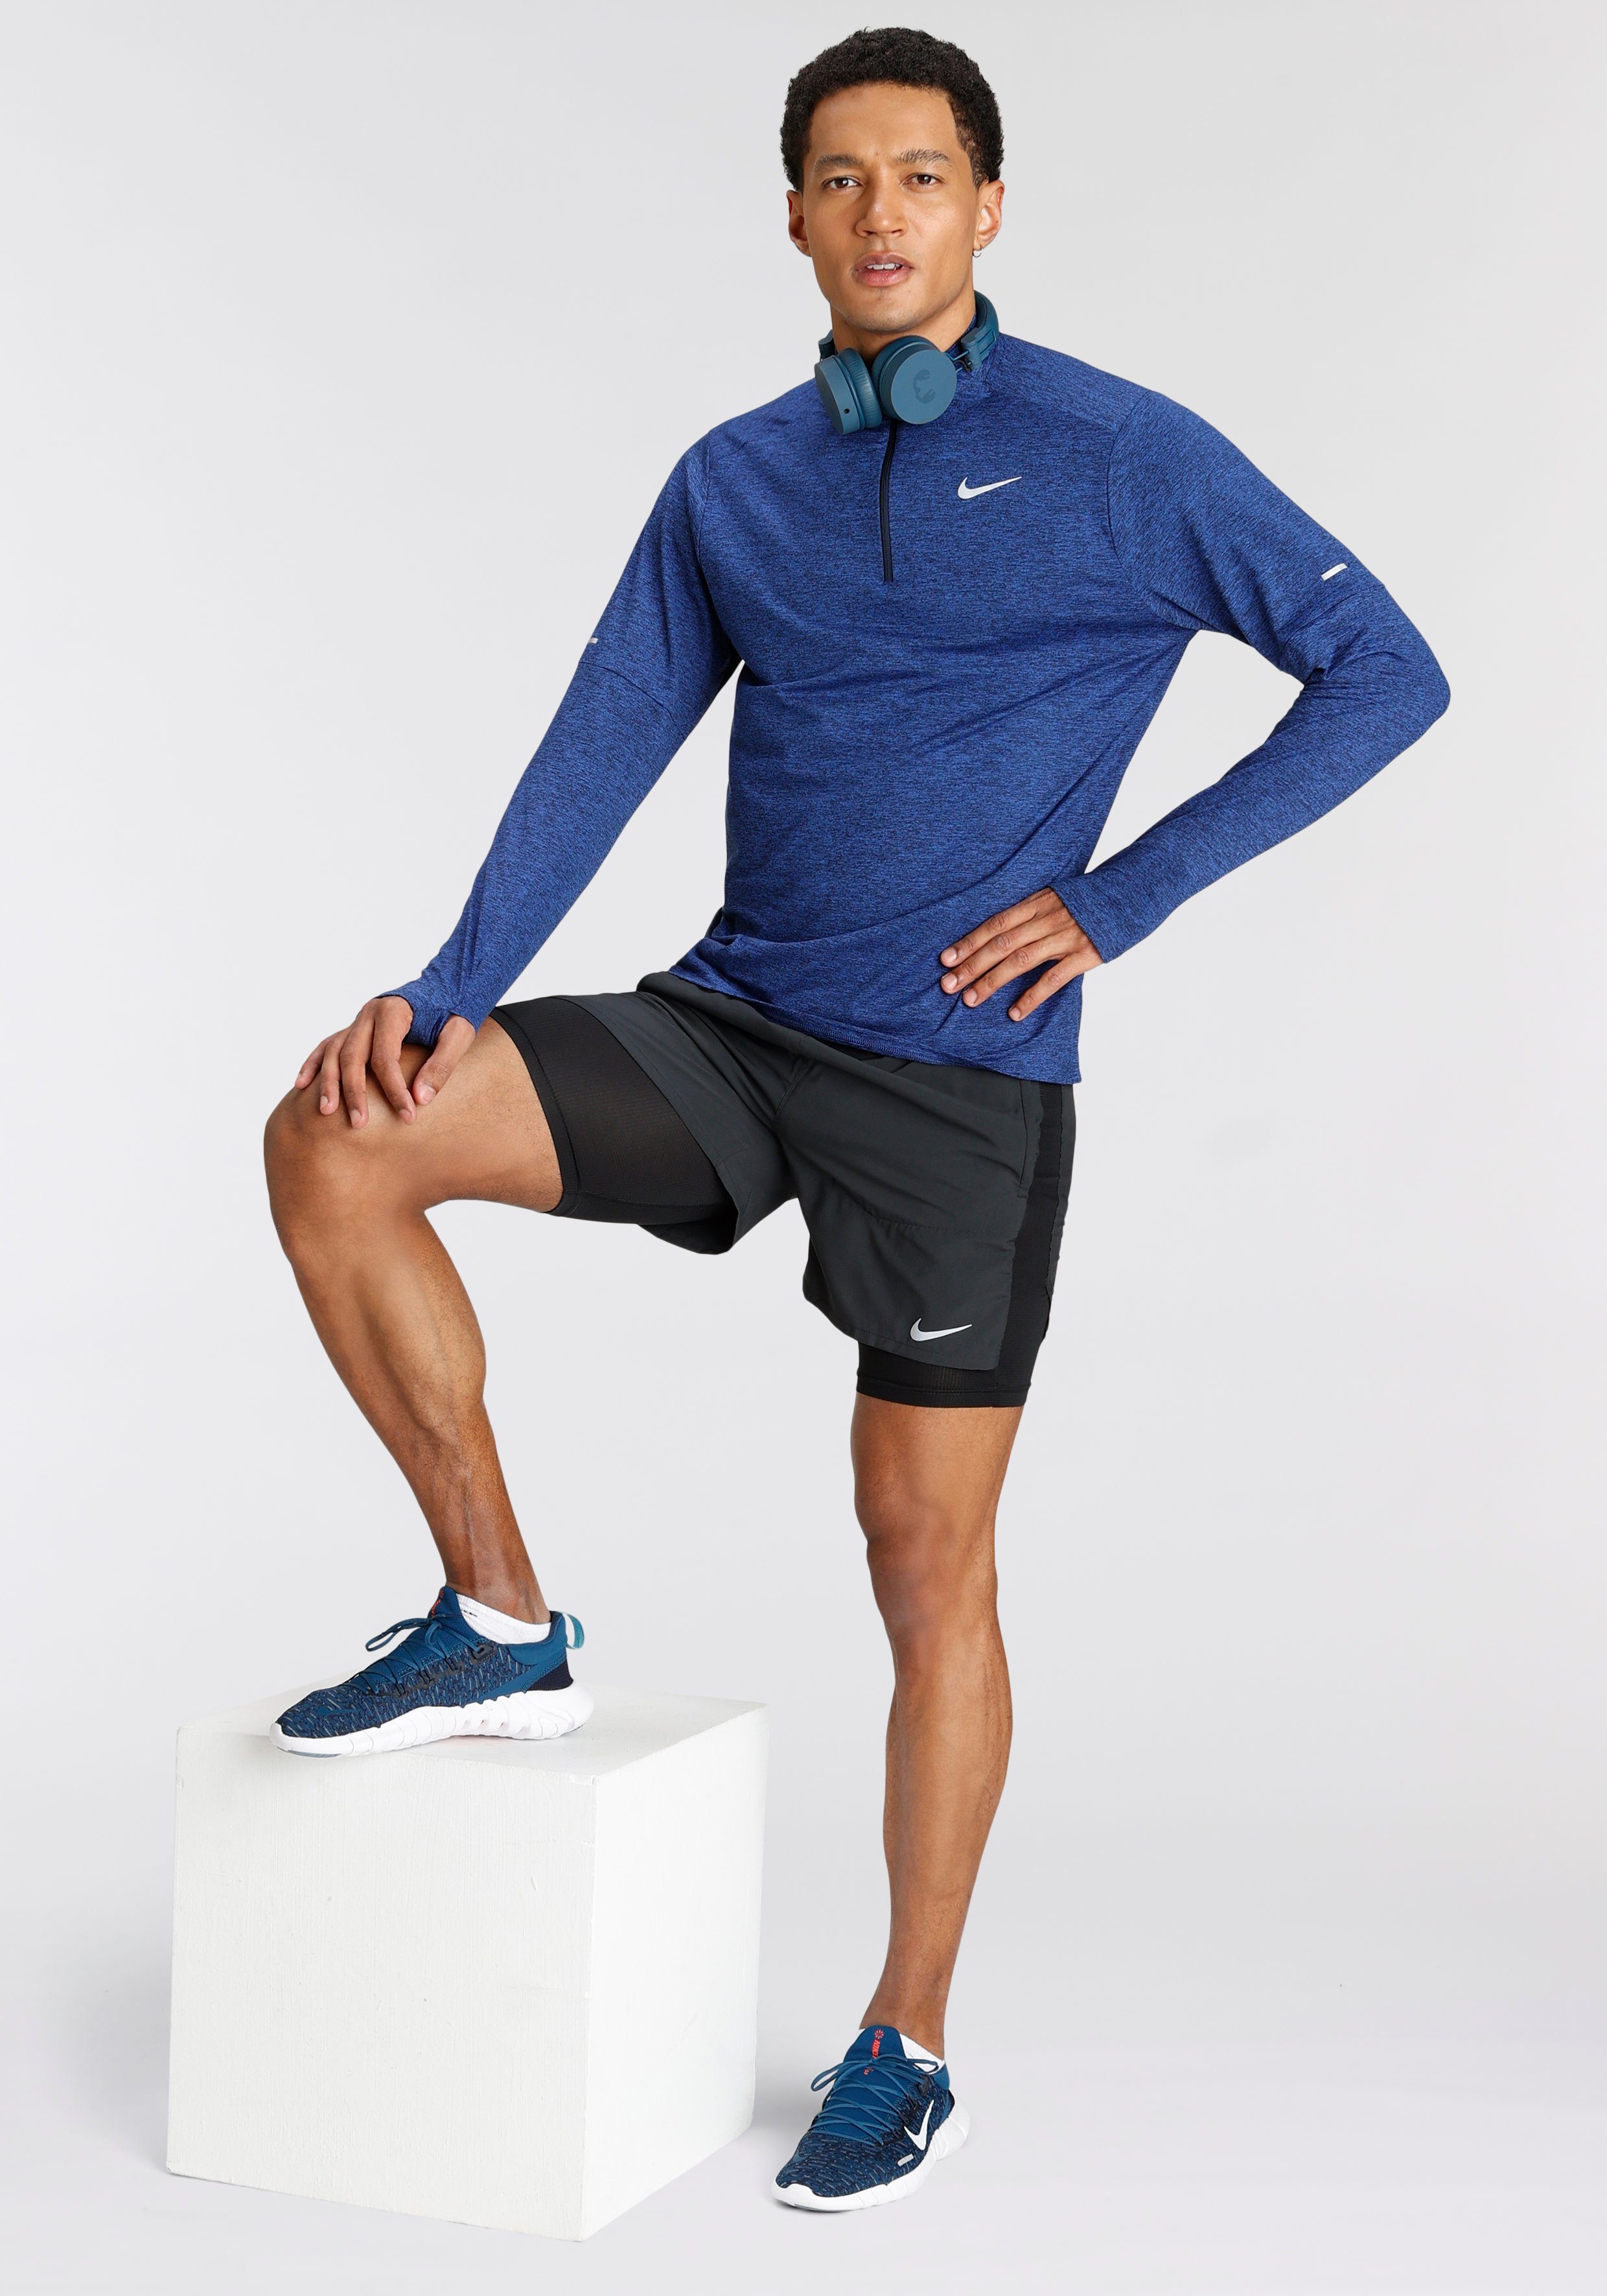 Men's SILV ROYAL/HTR/REFLECTIVE Element Top Laufshirt 1/-Zip Dri-FIT OBSIDIAN/GAME Running Nike